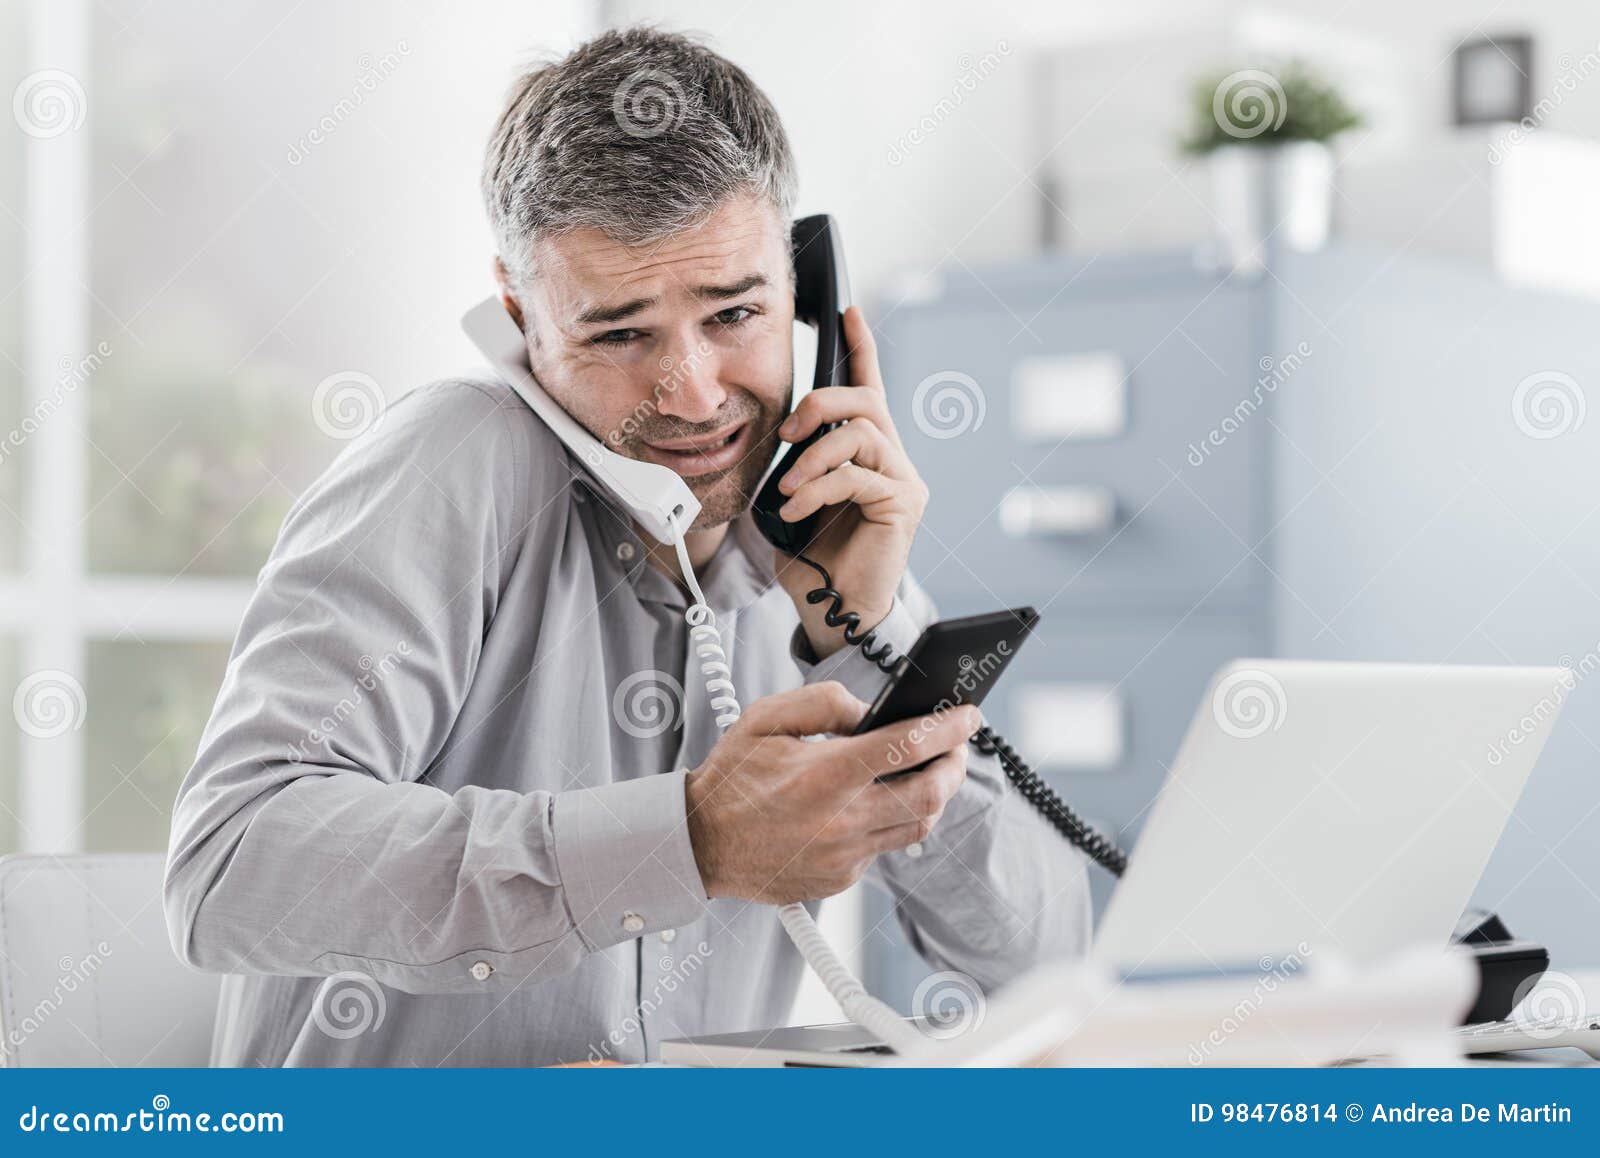 stressed businessman having multiple calls